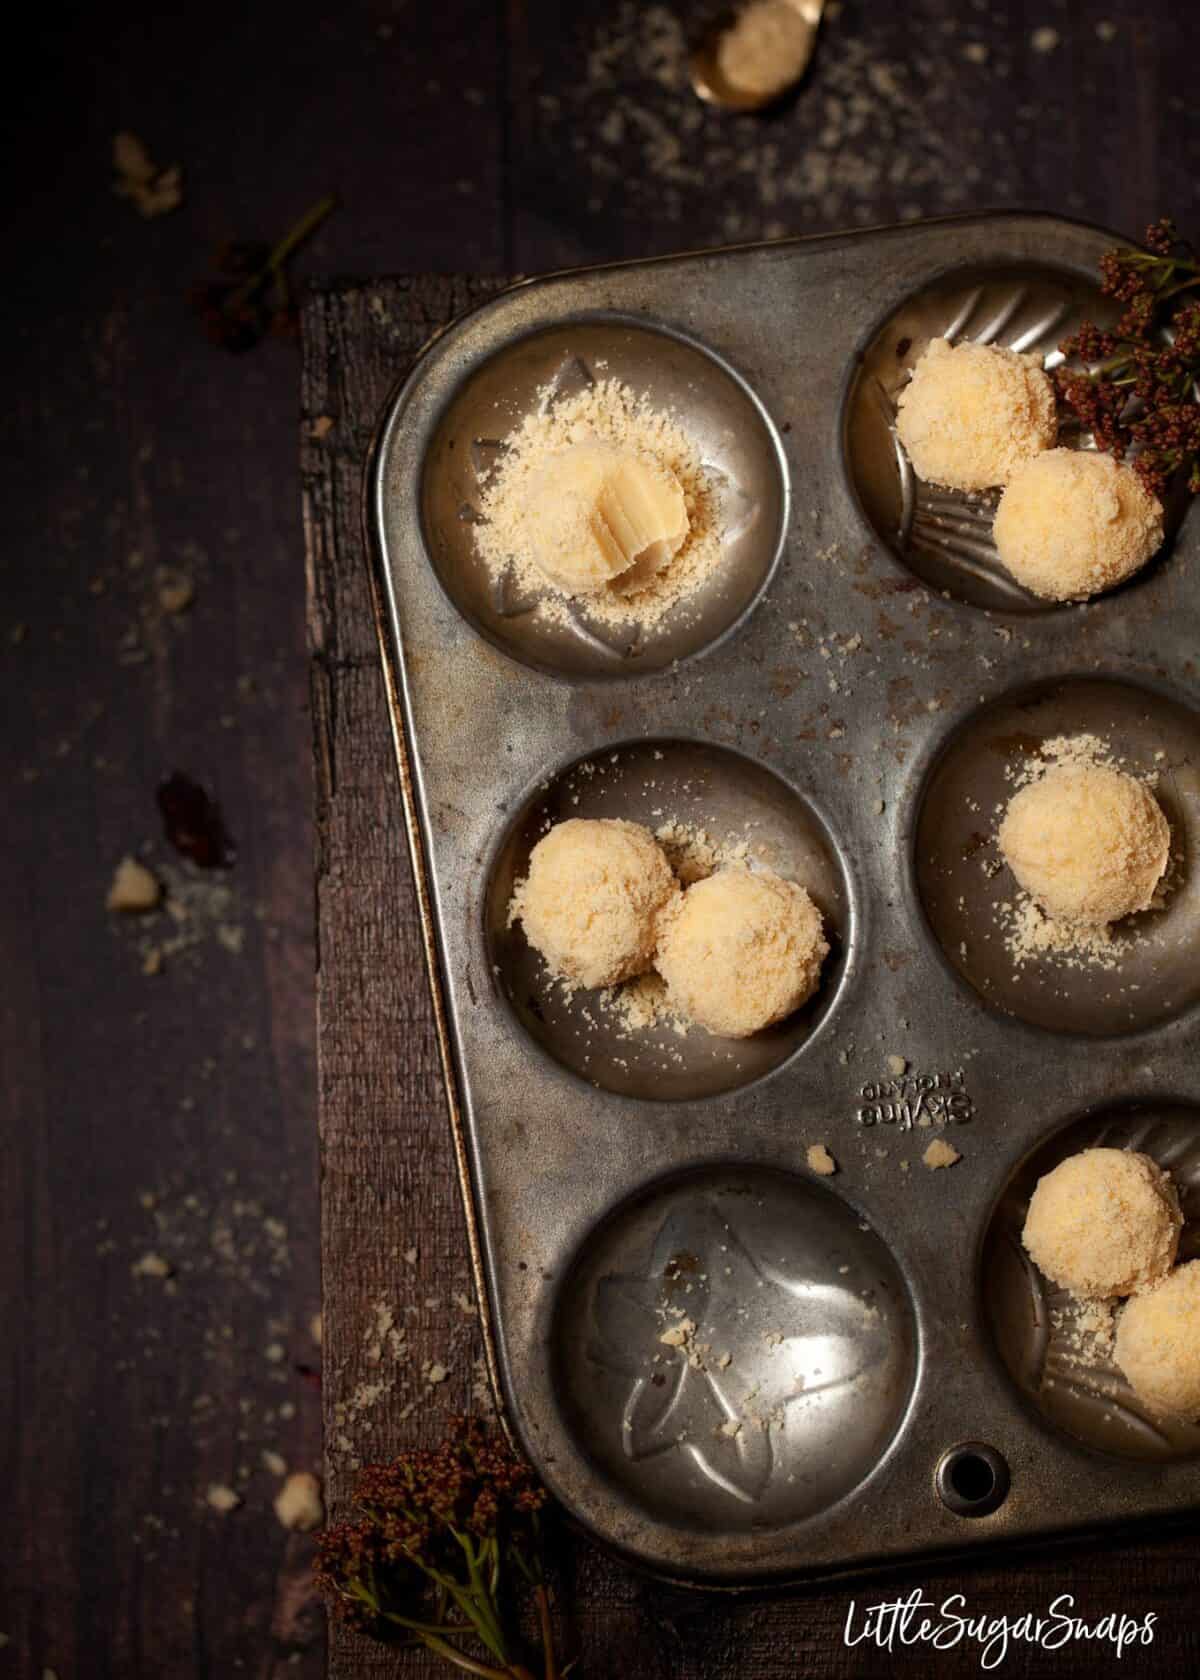 Custard Cream Truffles in a vintage baking tin. One has been bitten into.